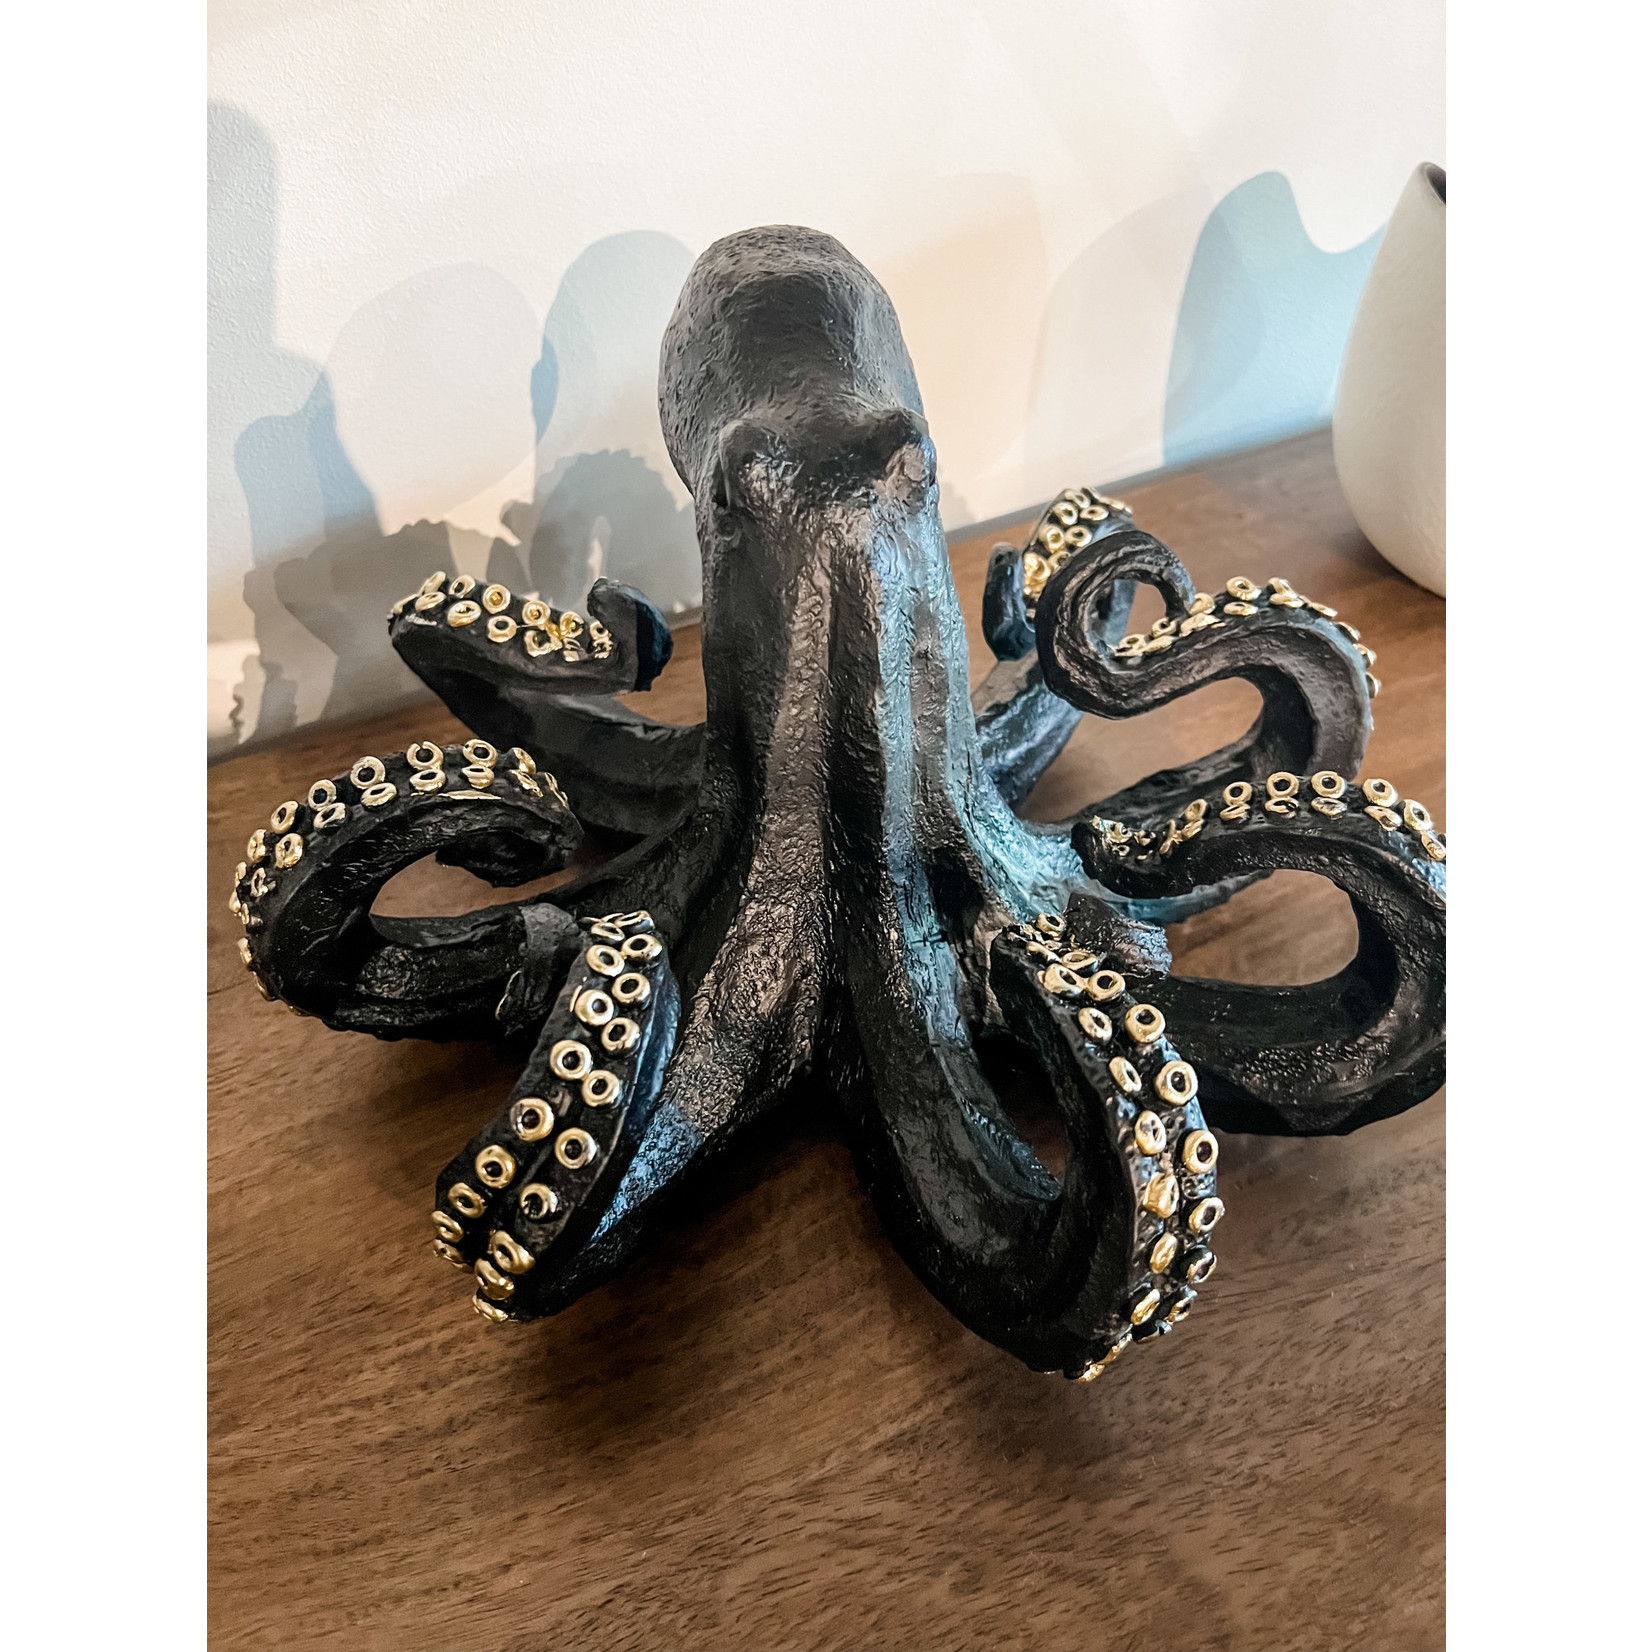 Mickler & Co. Octopus Sculpture